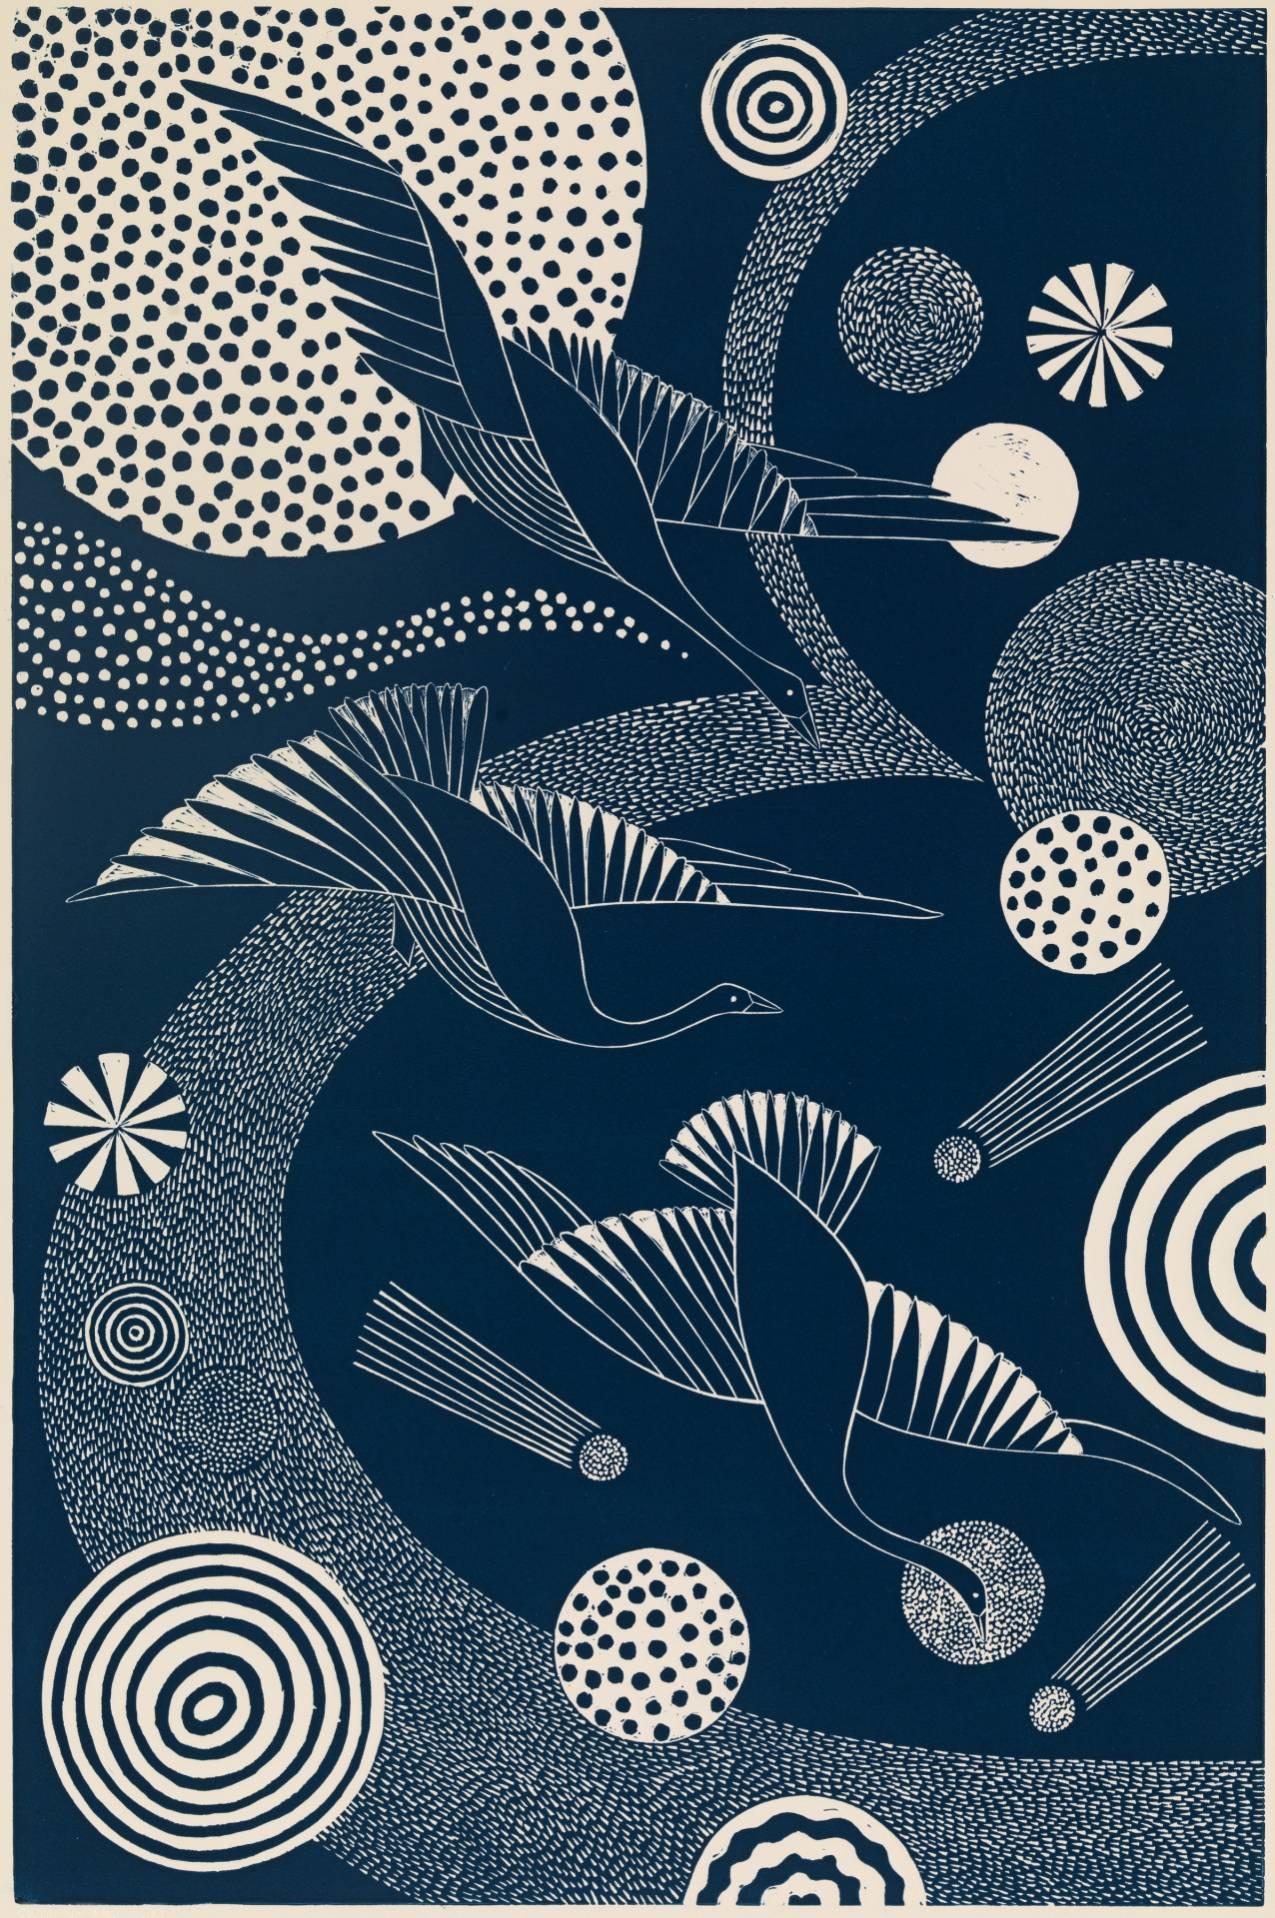 "Swooping and Swirling," Folk inspired Navy Linoleum Block Print of Birds Flying